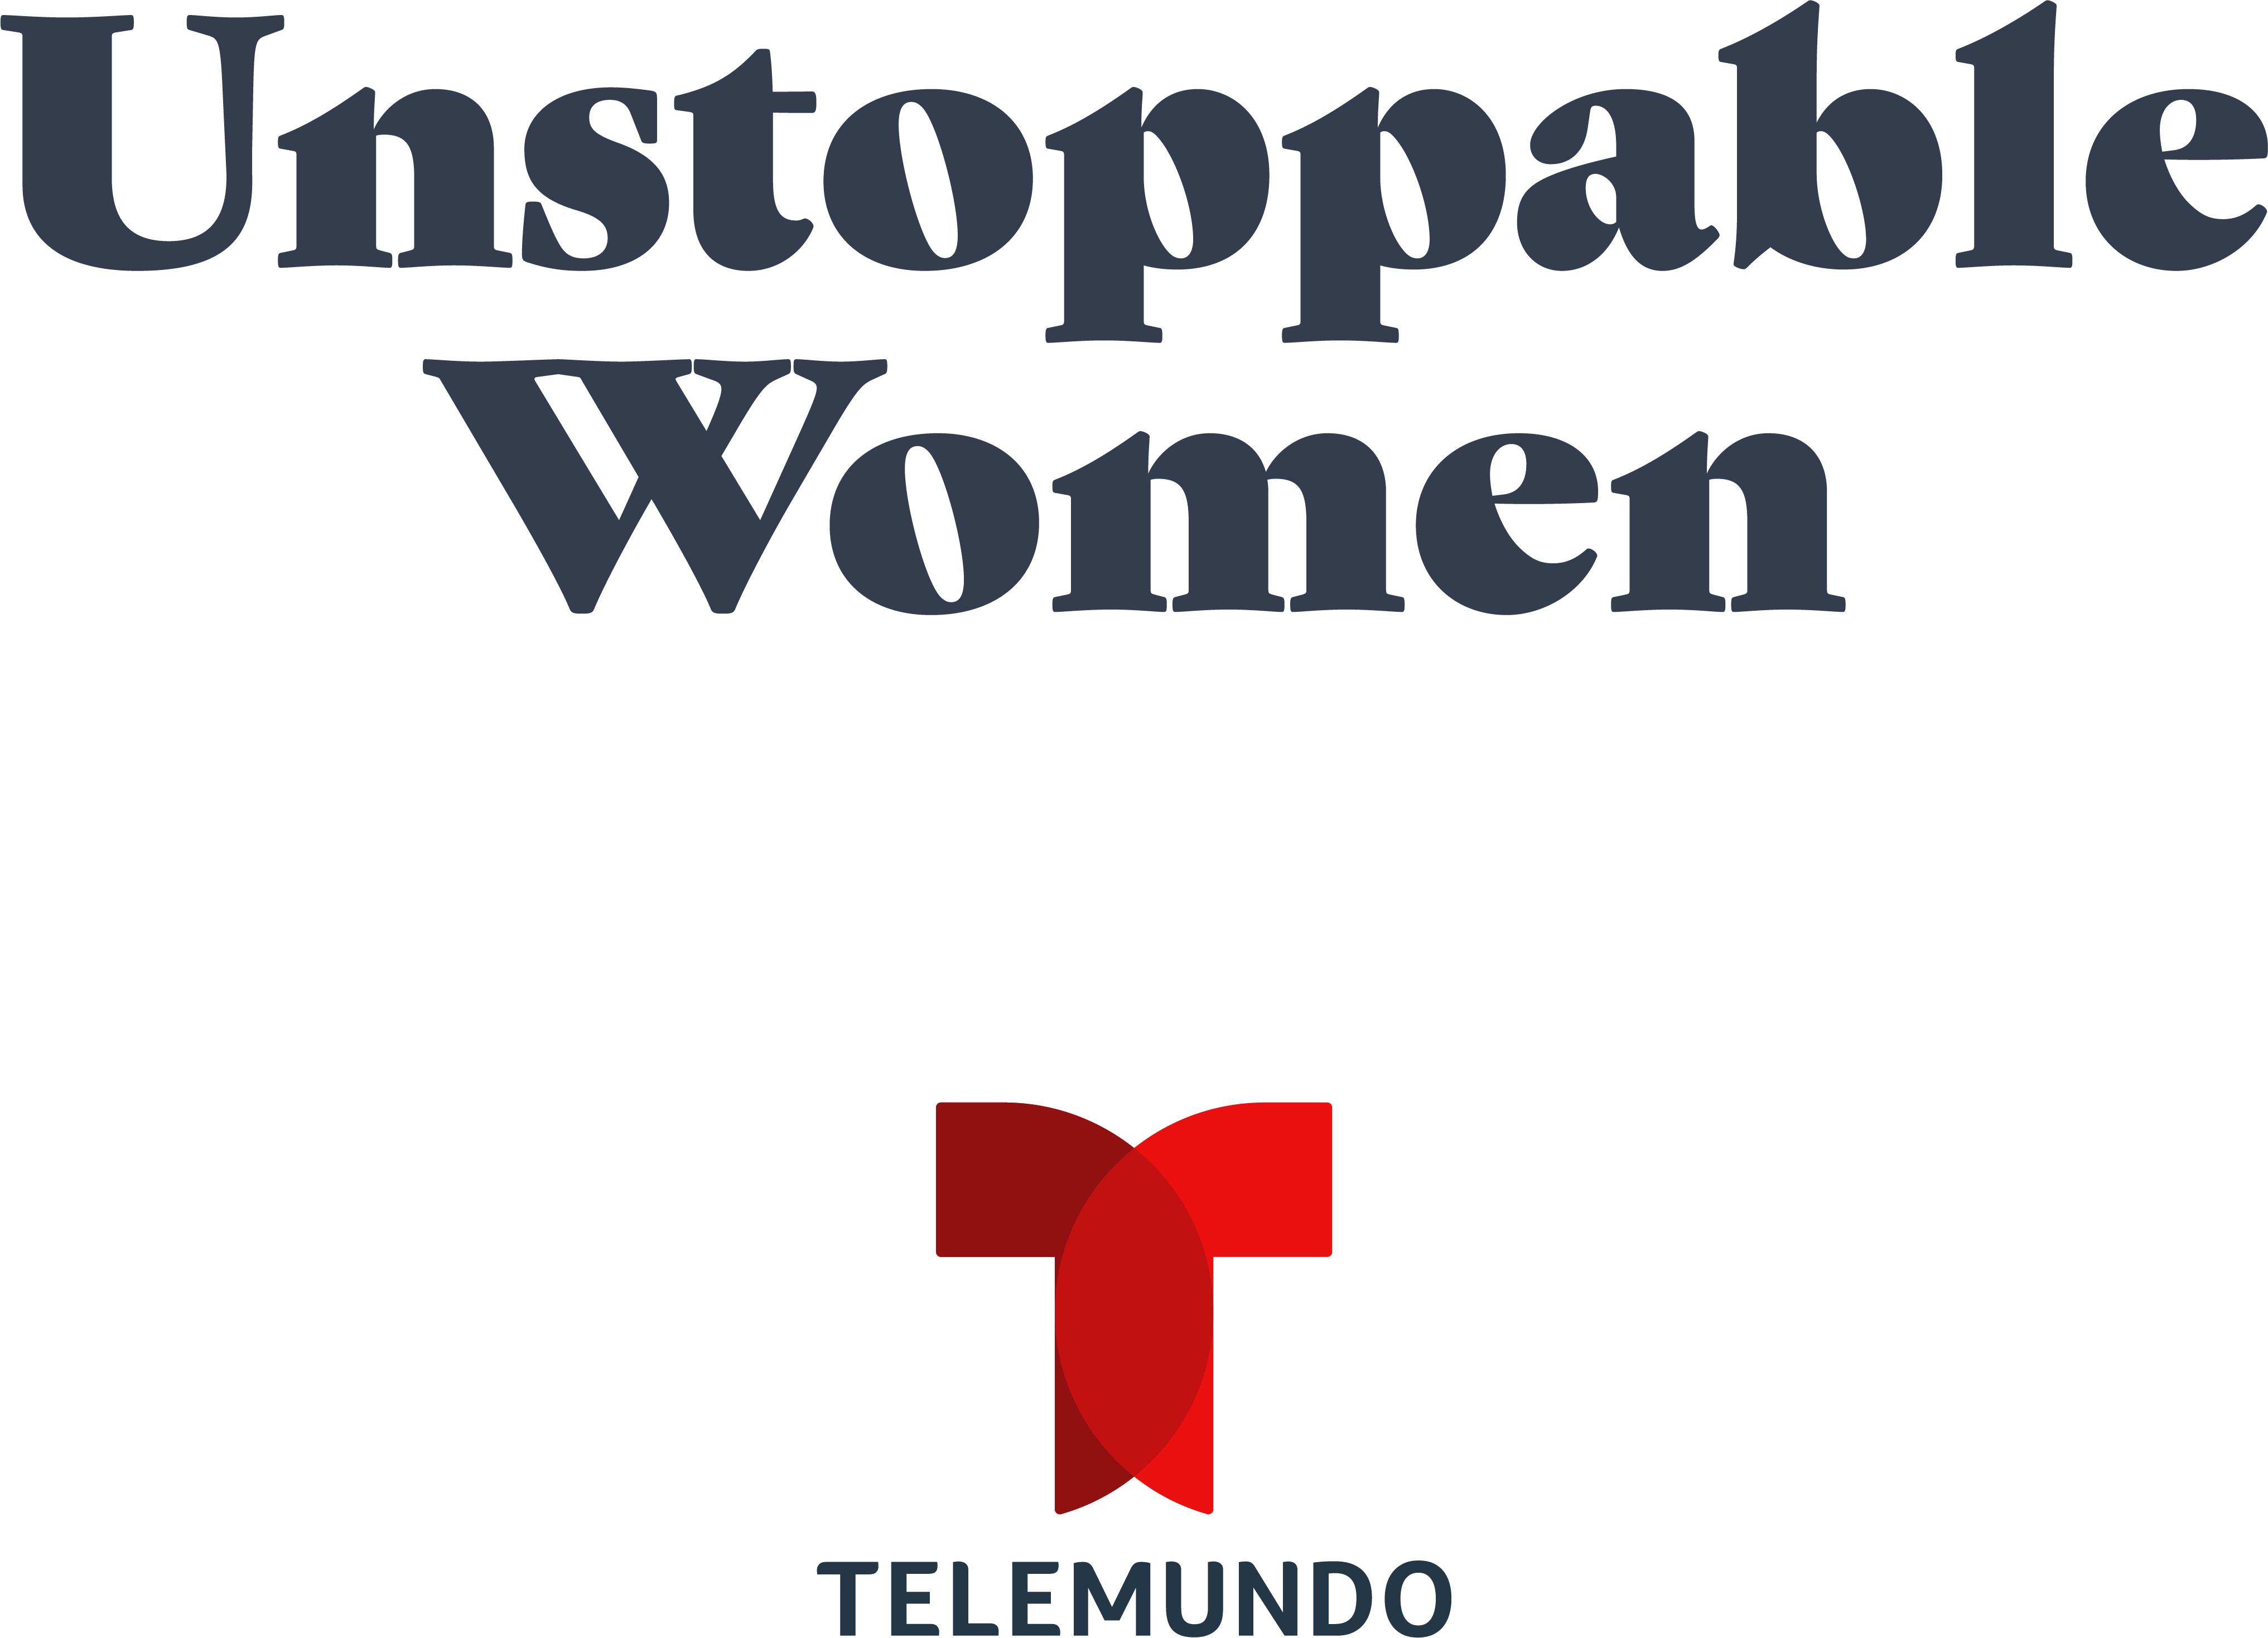 Telemundo's Unstoppable Women Initiative